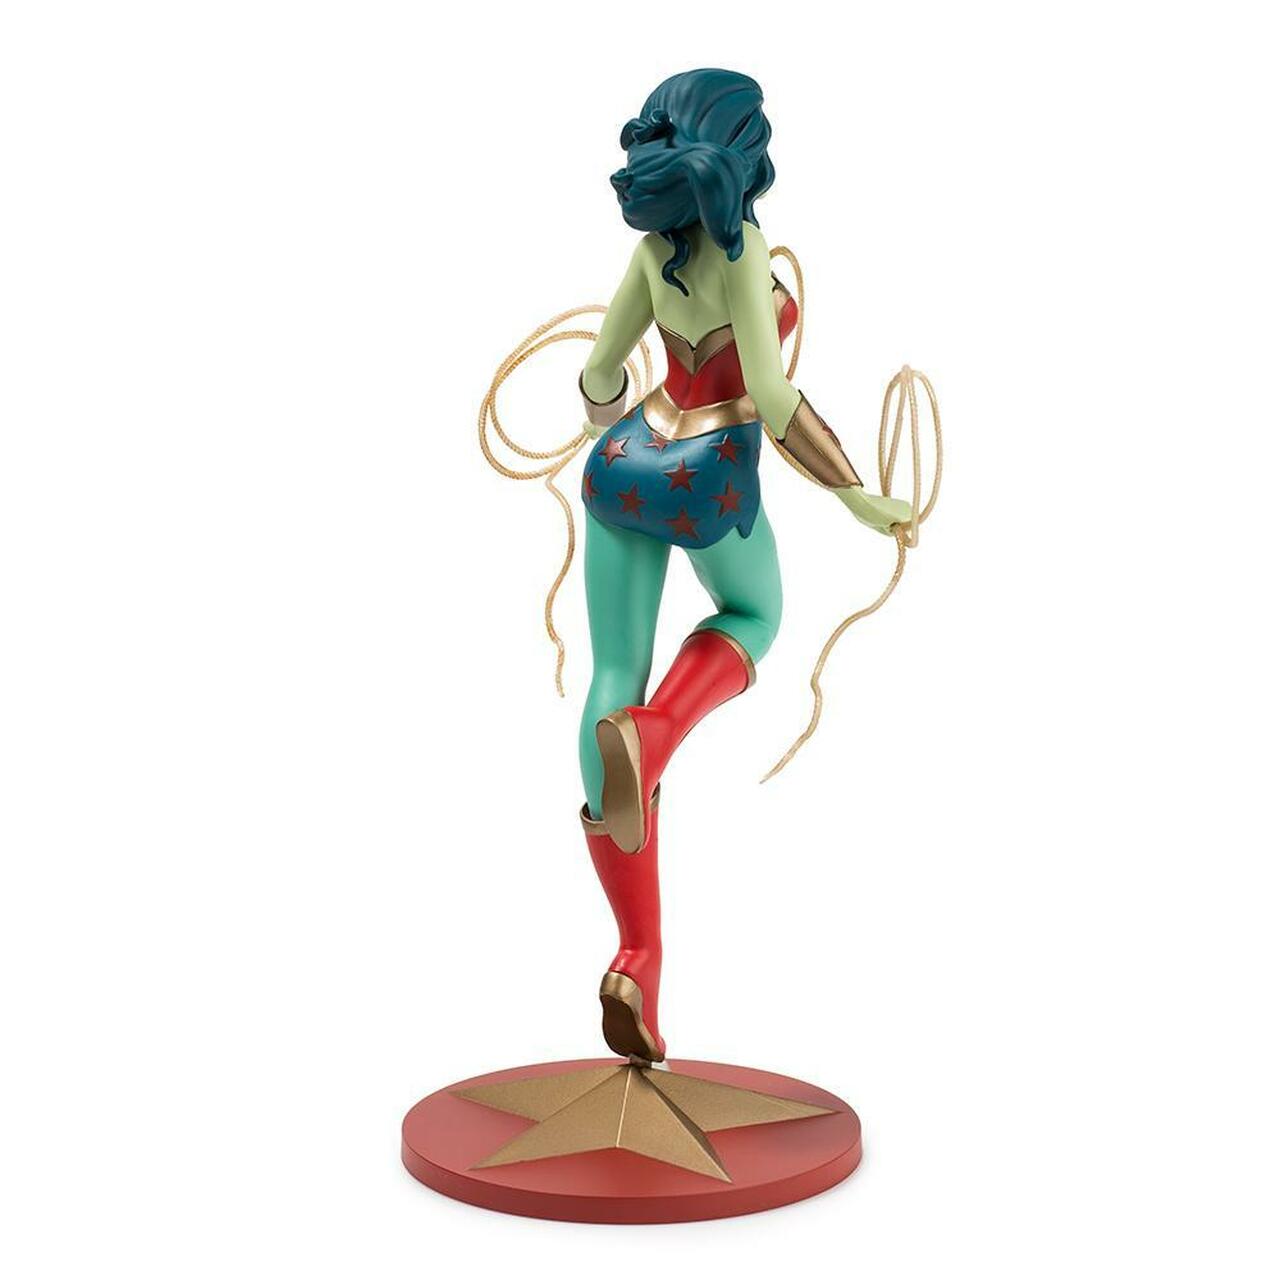 Kidrobot: Wonder Woman Figure by Tara McPherson 28 cm - Art Toy, DC Comics, designer toy, Designer Vinyl, justice league, Kidrobot, Tara McPherson, vinyl art, wonder woman - Gadgetz Home